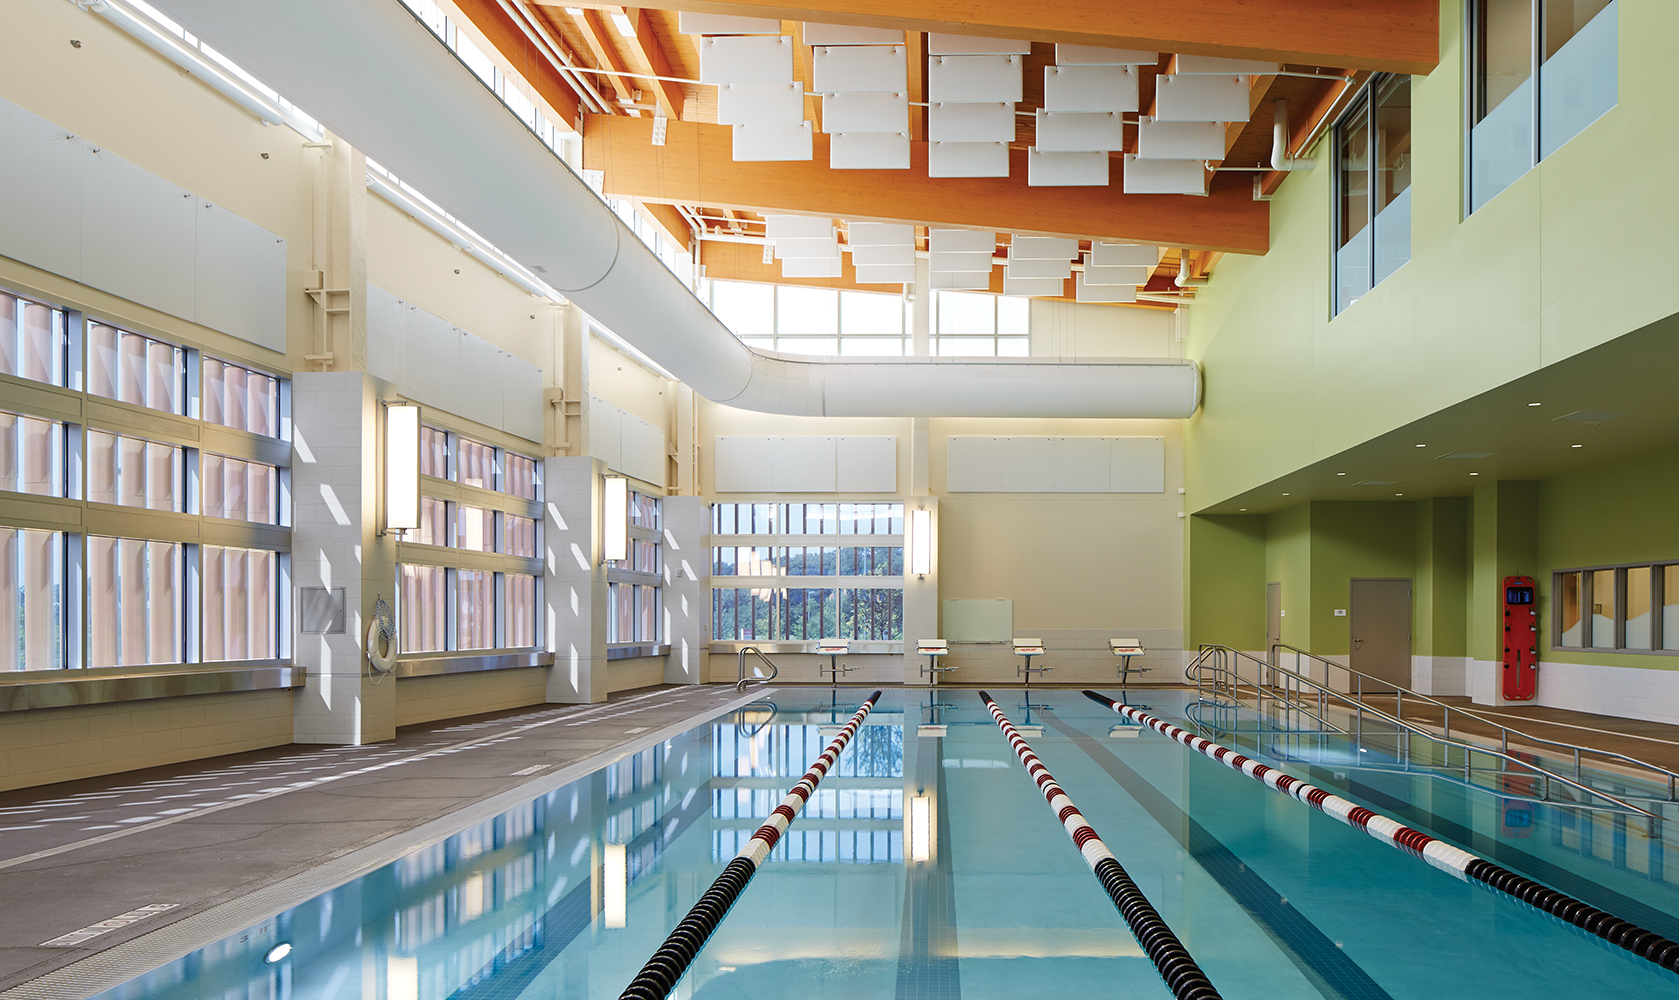 Air Foil sconces showing off modern lighting design along a well-lit indoor pool.